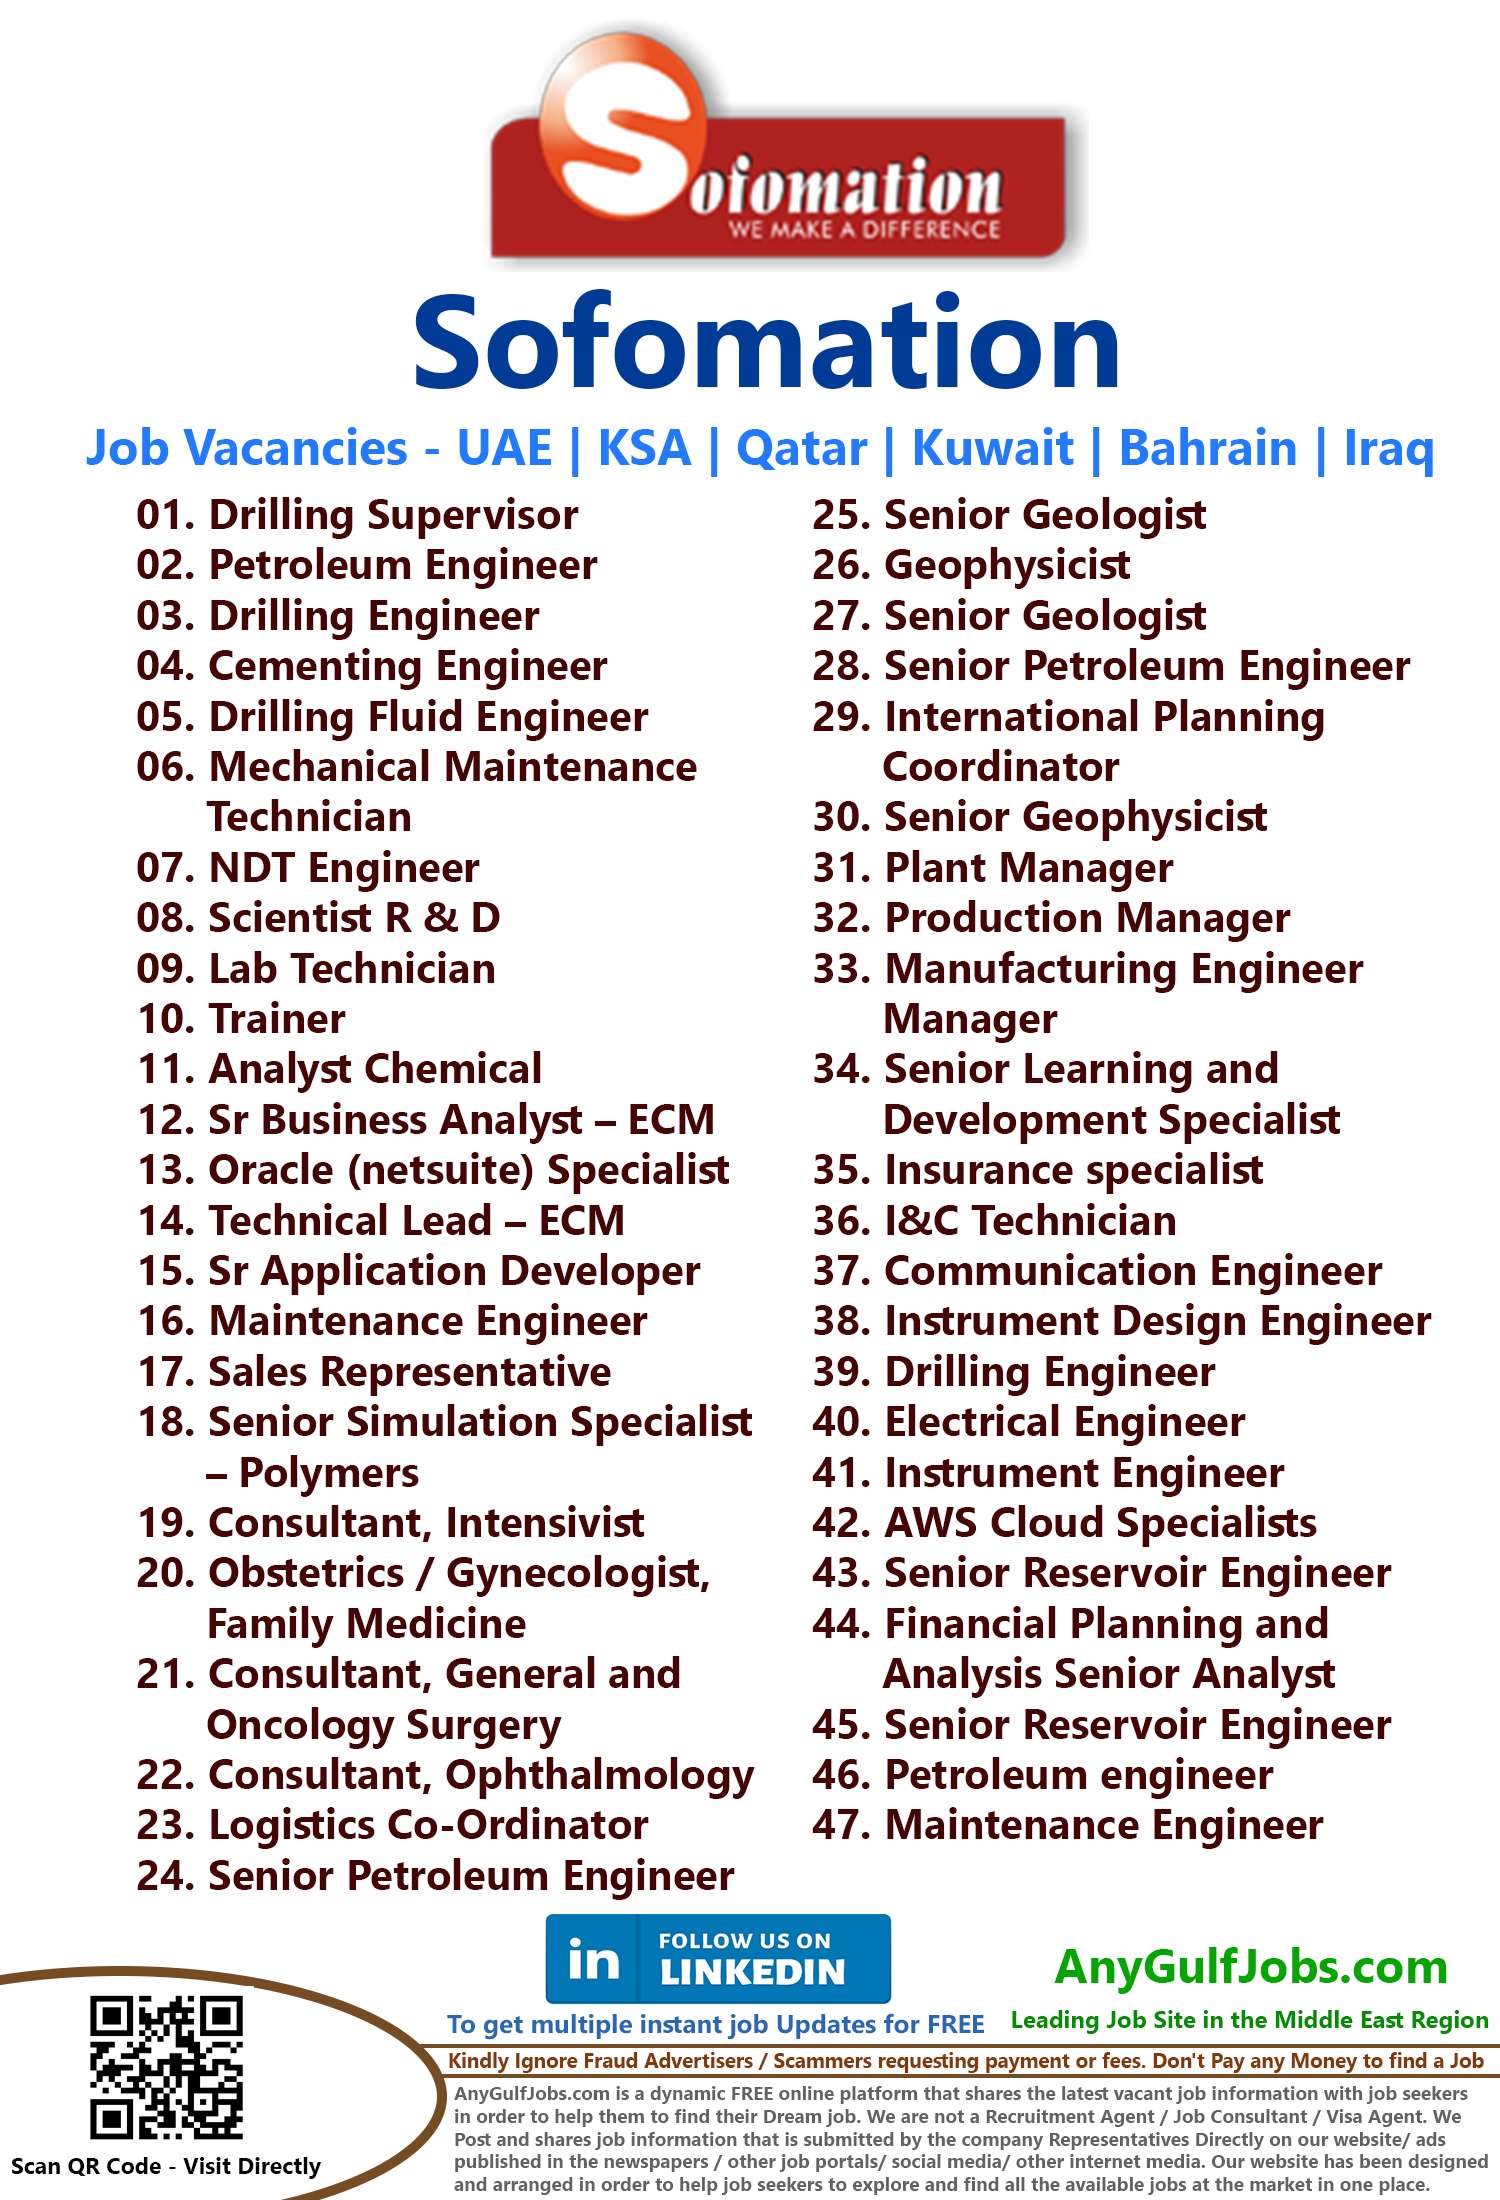 Sofomation Job Vacancies - UAE | KSA | Qatar | Kuwait | Bahrain | Iraq